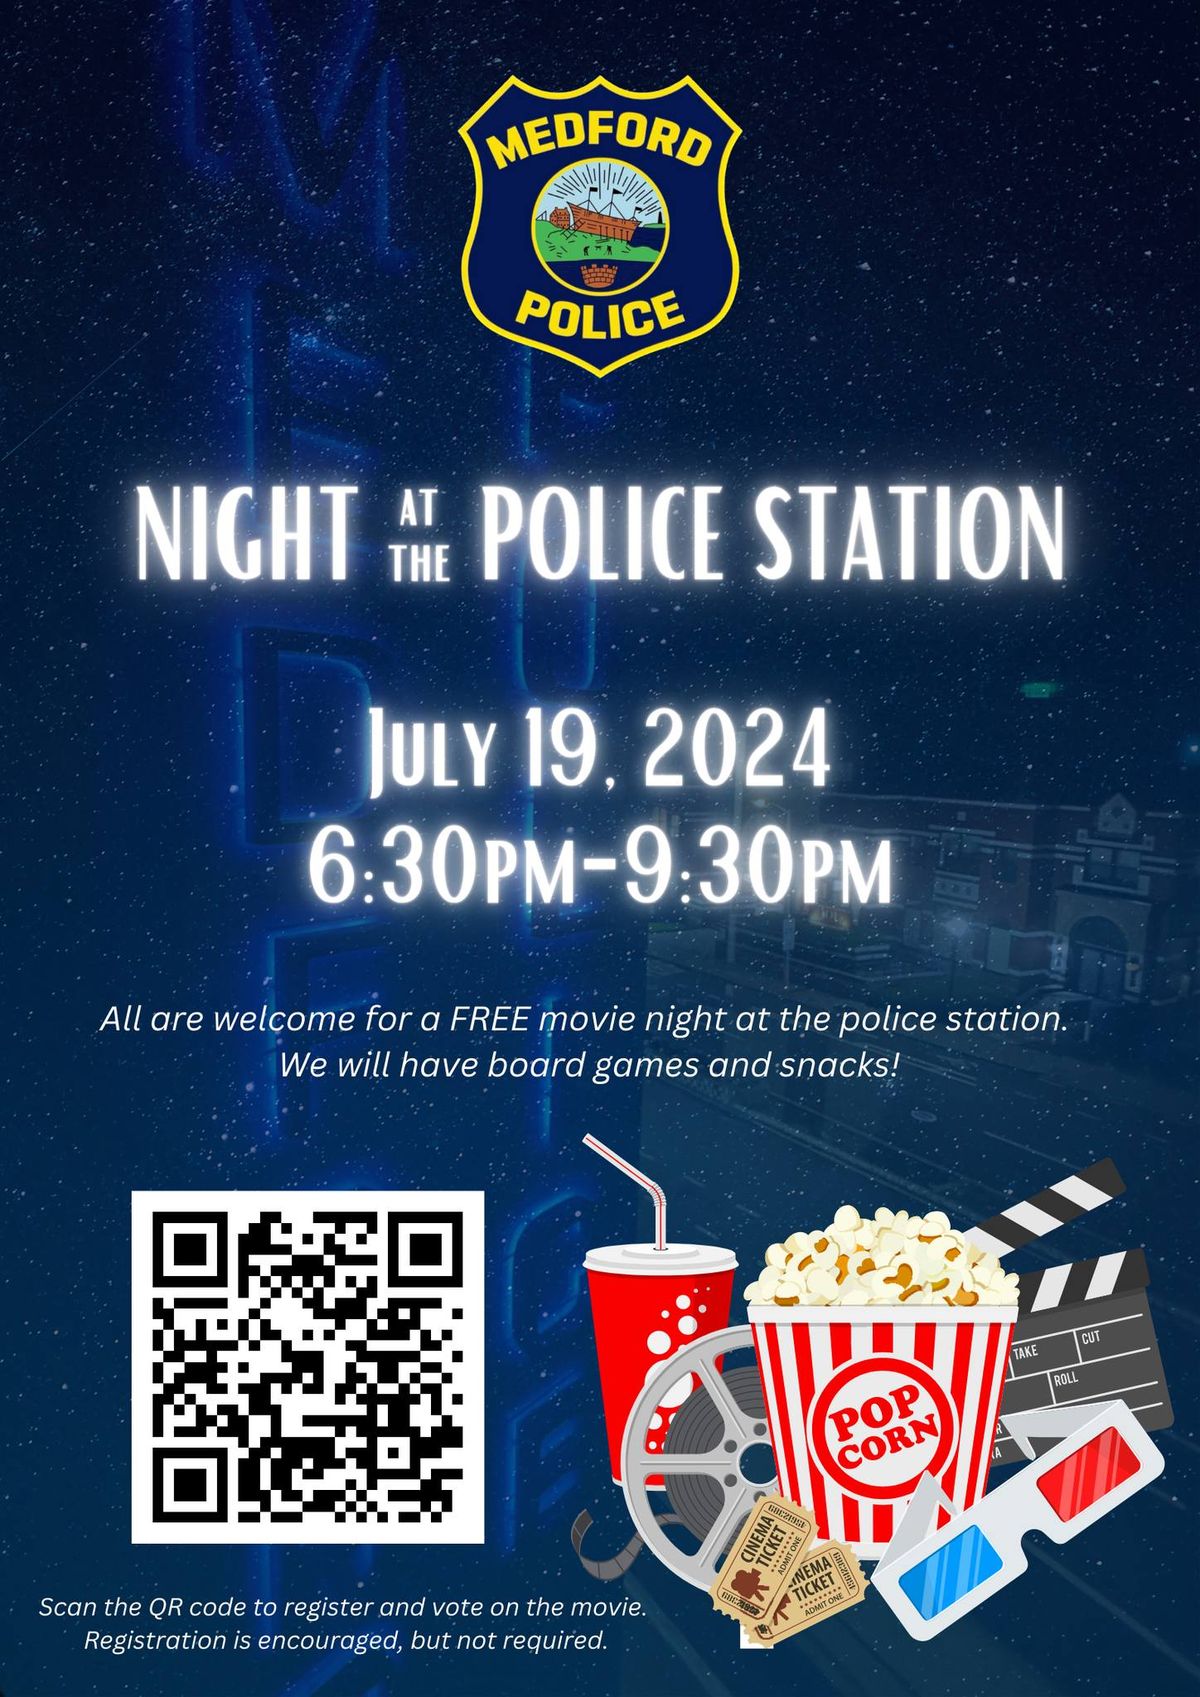 Night at the Medford Police Station